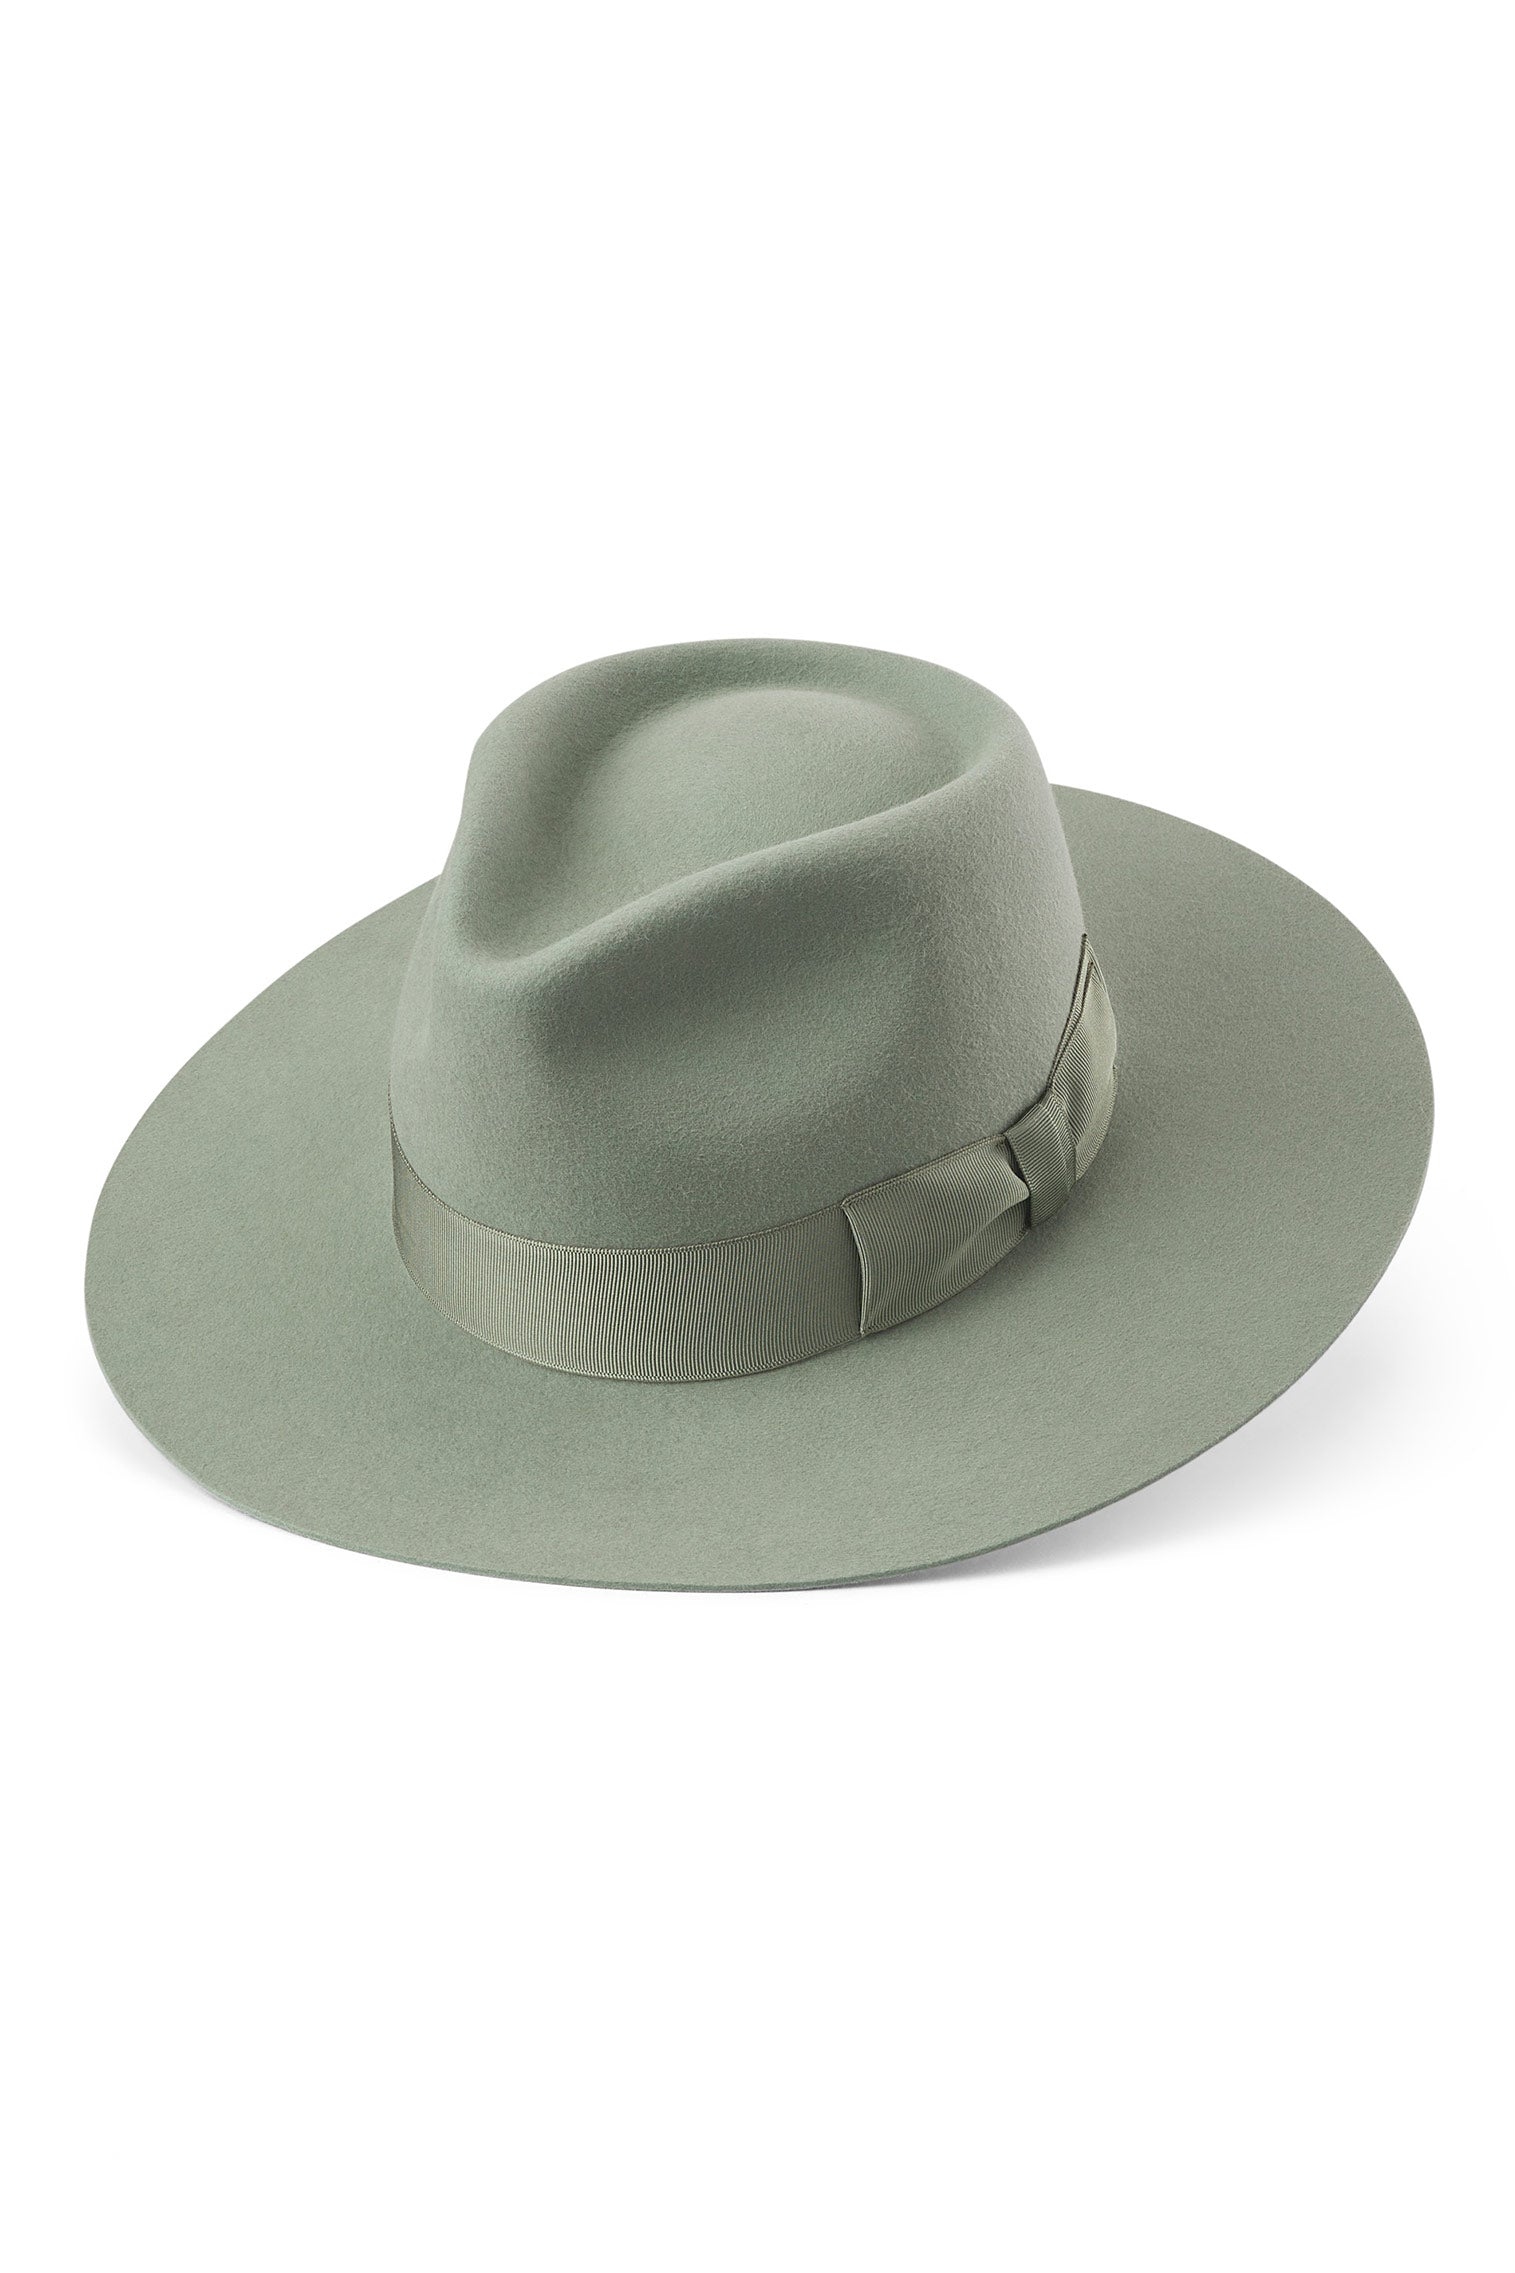 Toni Green Flat-Brim Fedora - New Season Hat Collection - Lock & Co. Hatters London UK